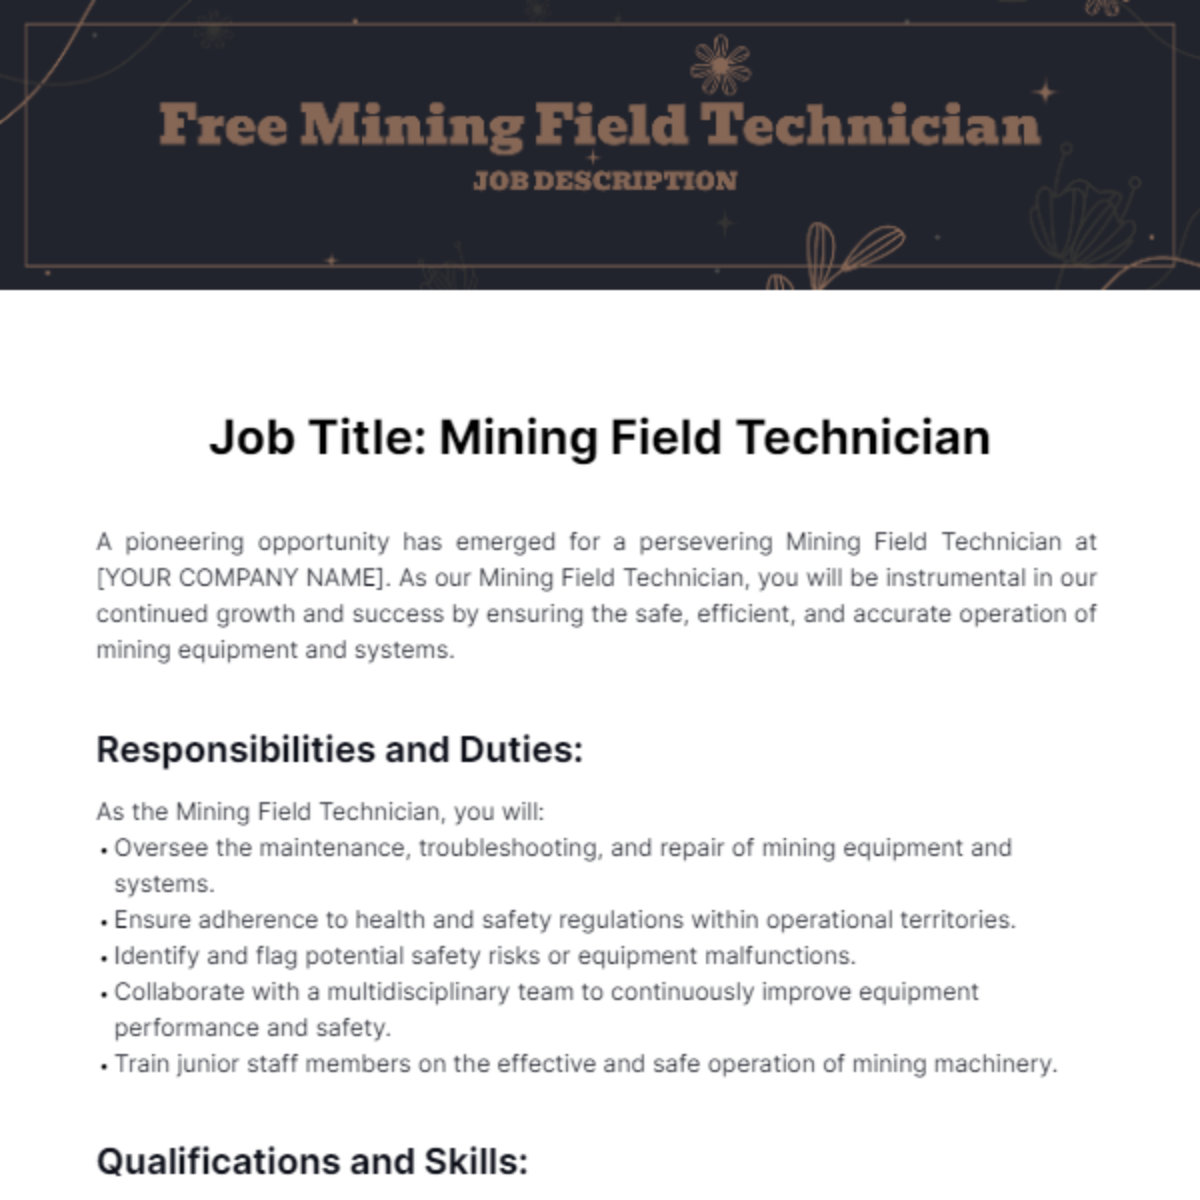 Free Mining Field Technician Job Description Template